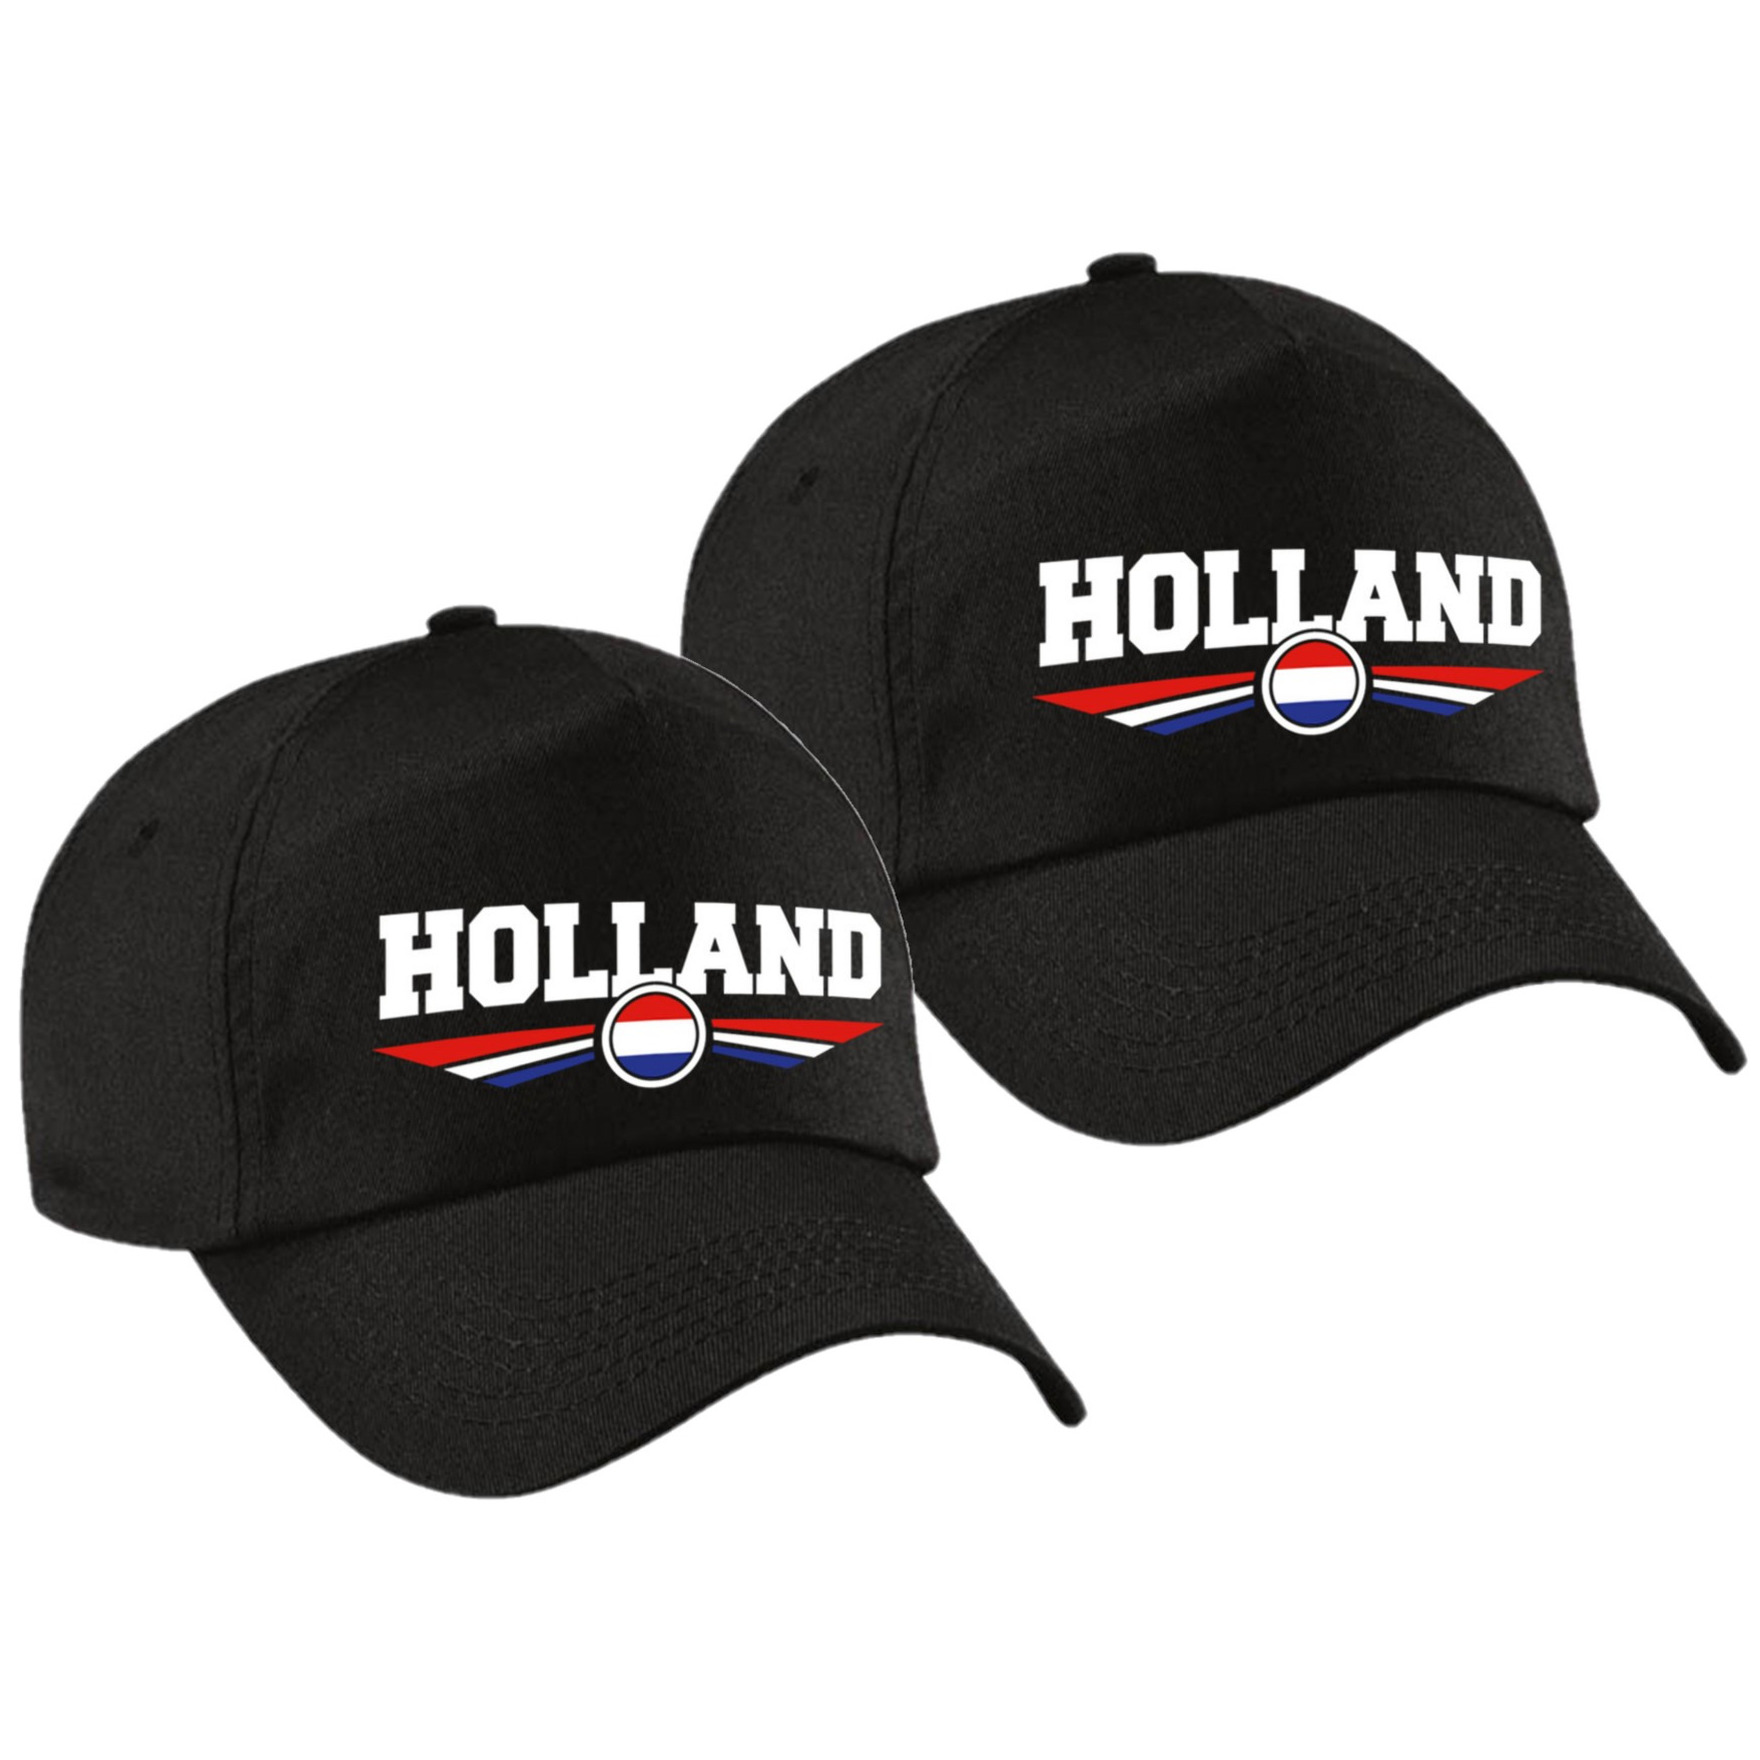 2x stuks nederland - Holland landen pet - baseball cap zwart kinderen